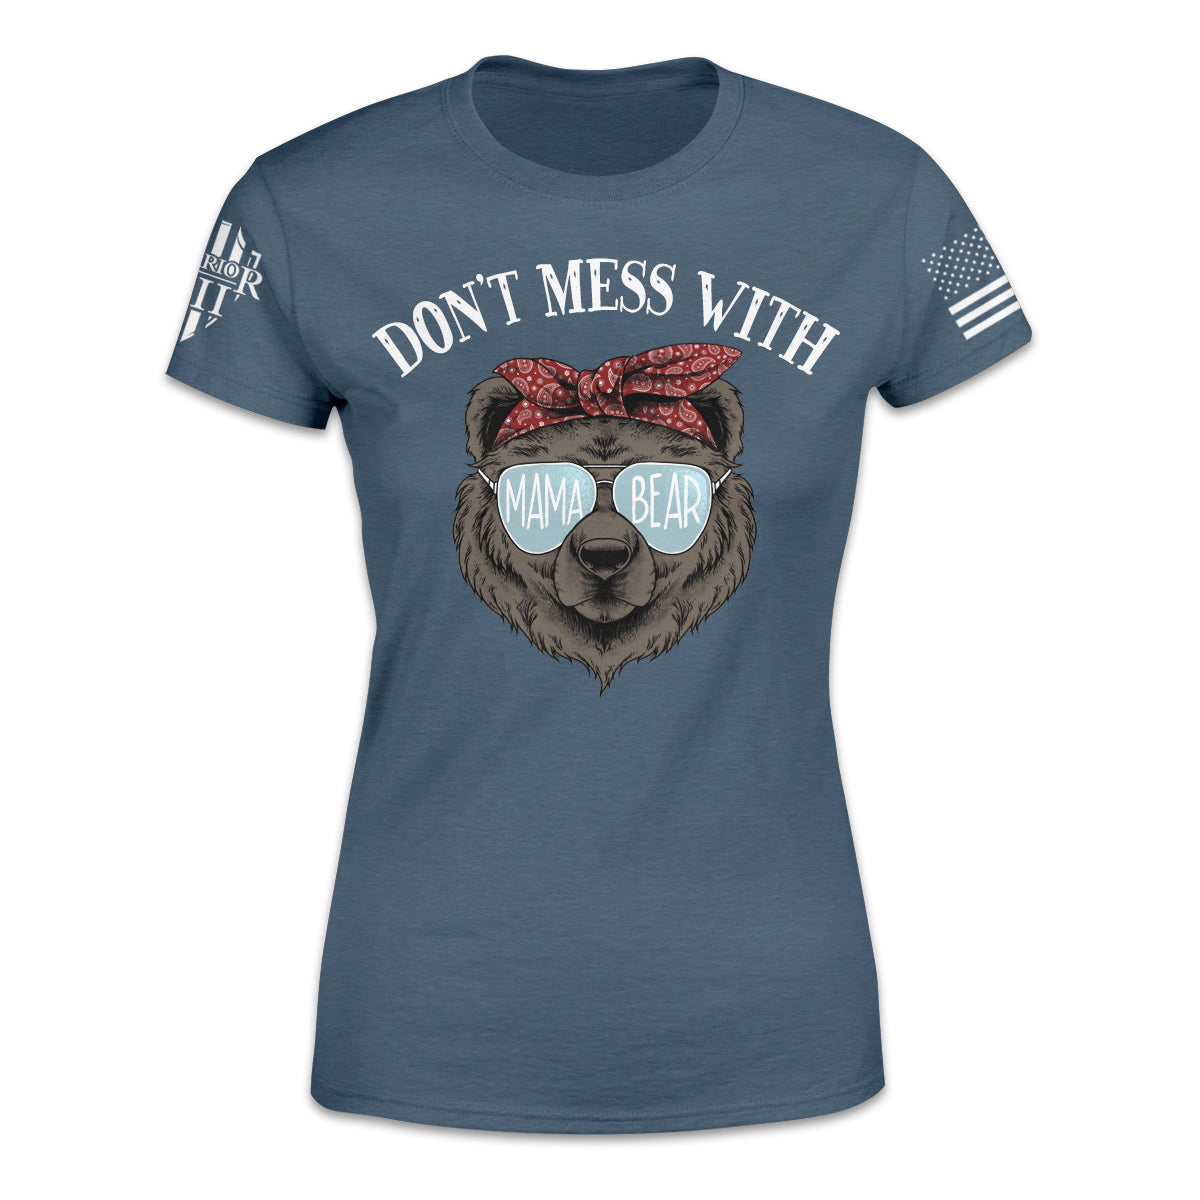 Shop Women's Mama Bear T-Shirt